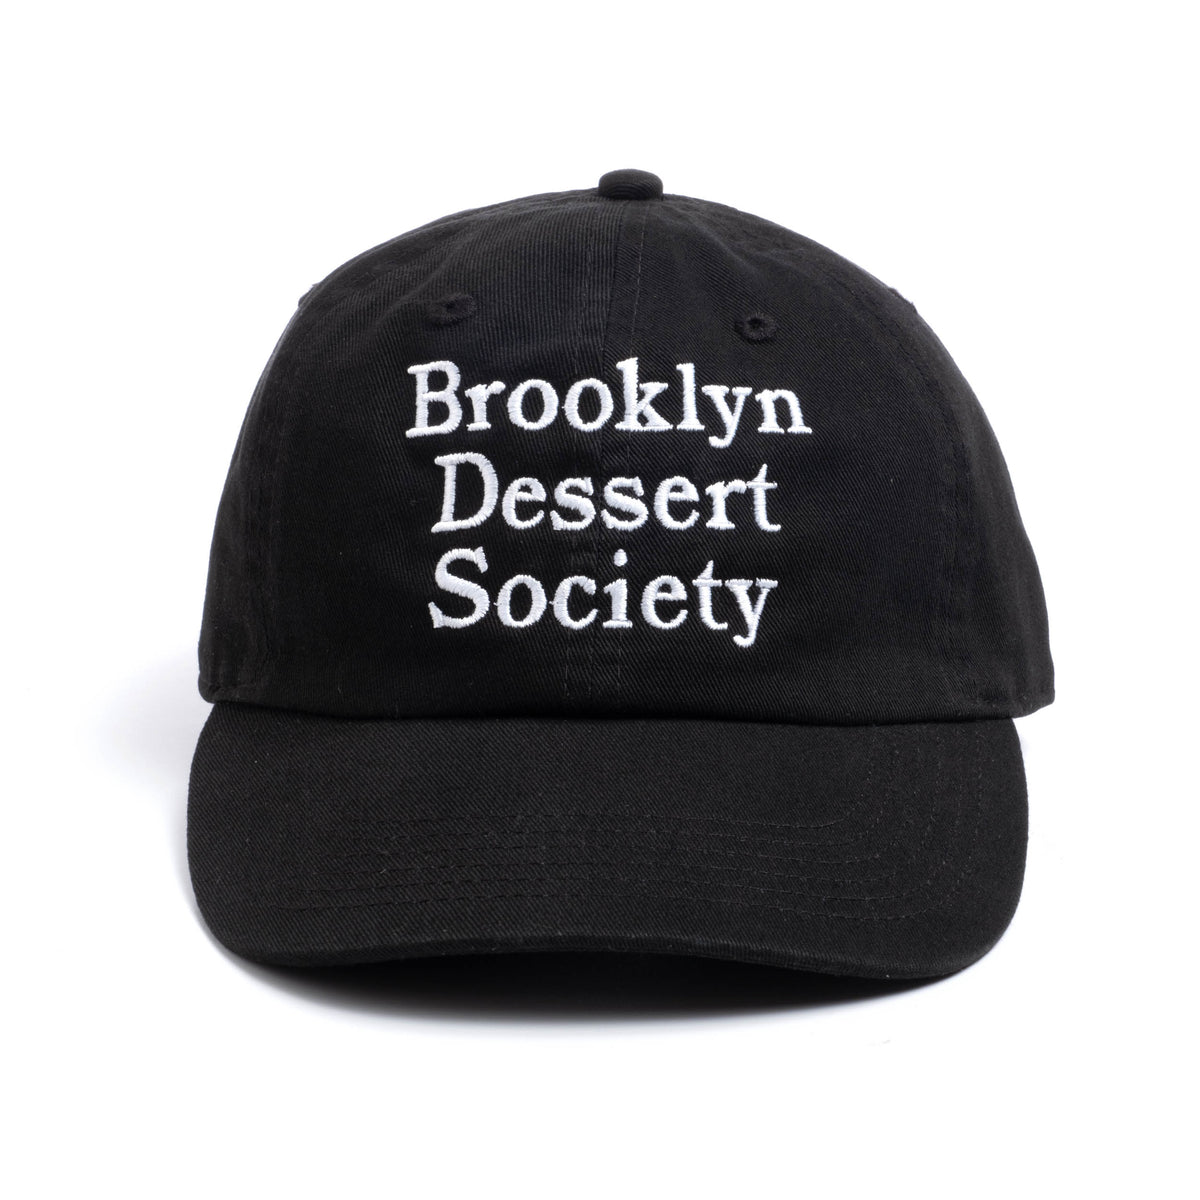 Society - Dad Hat